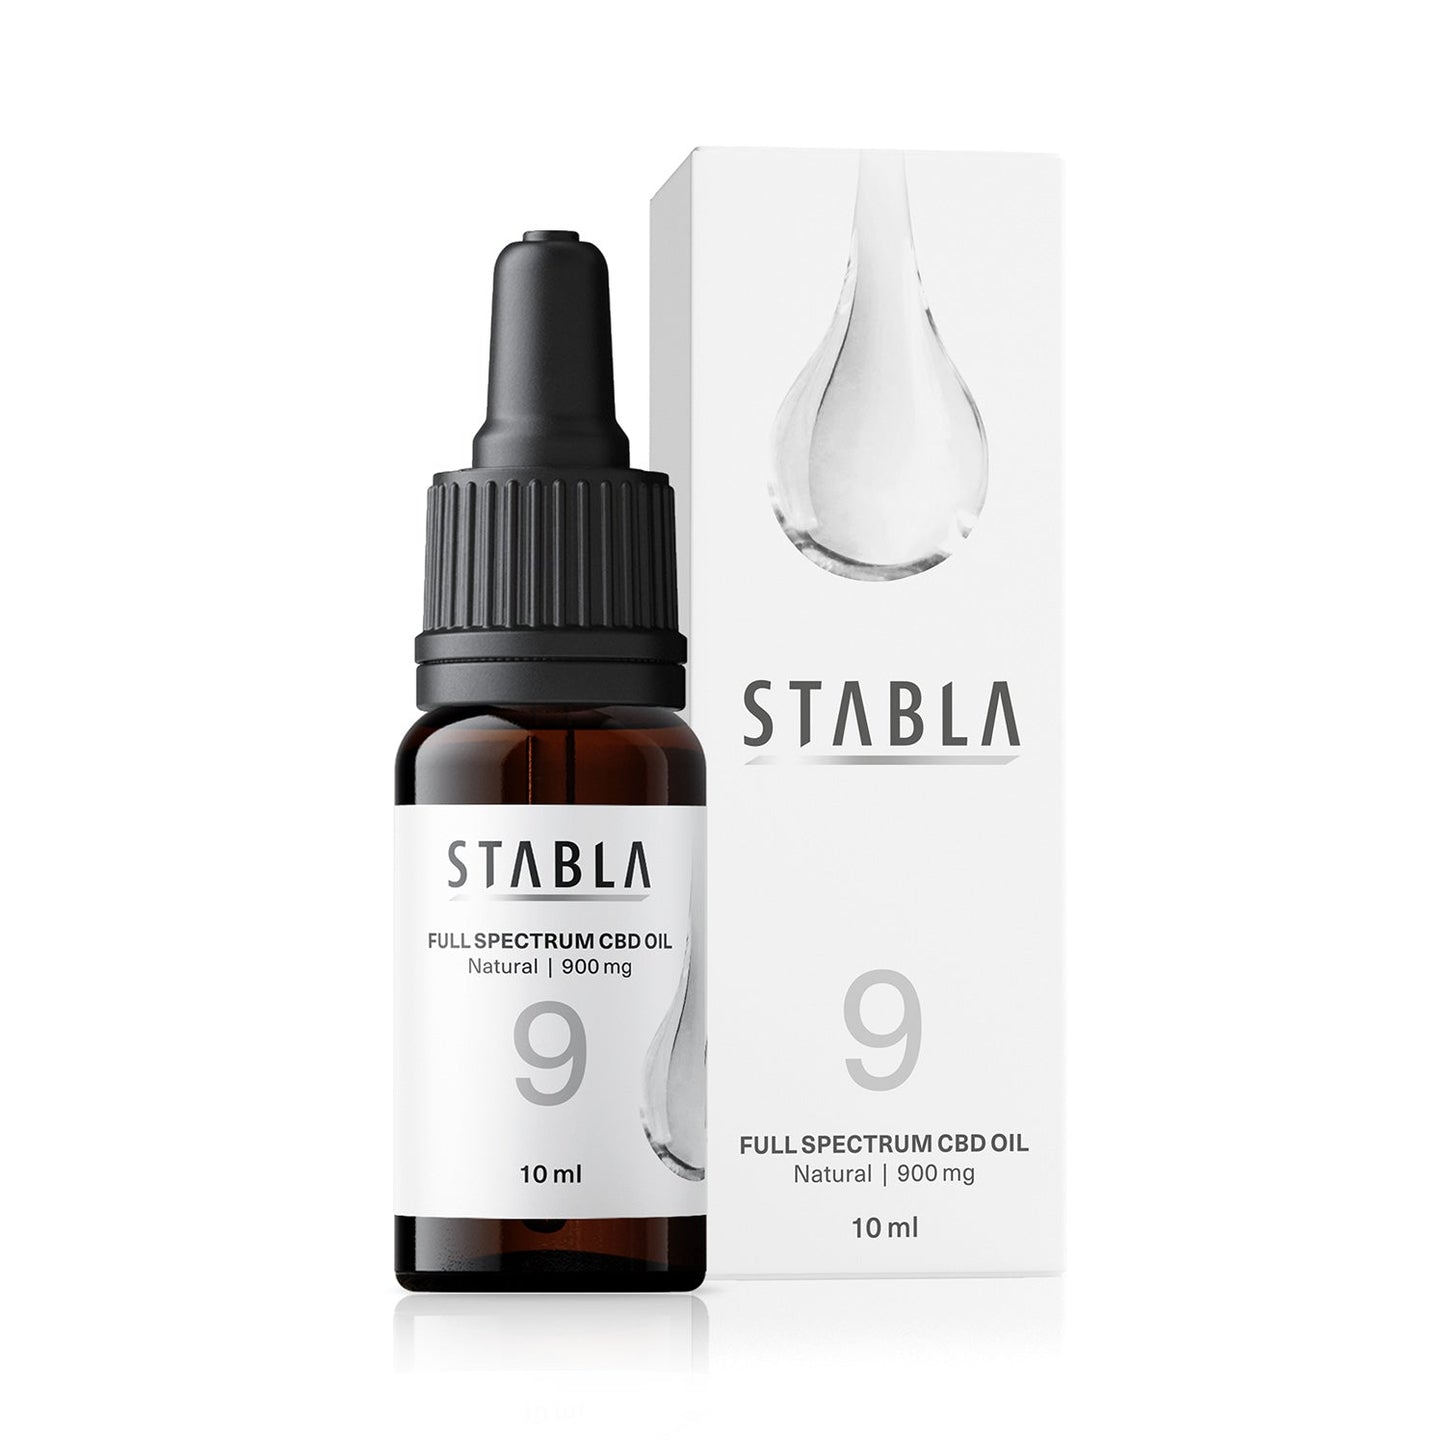 STABLA Full Spectrum CBD Oil 9%, Natural 900 mg